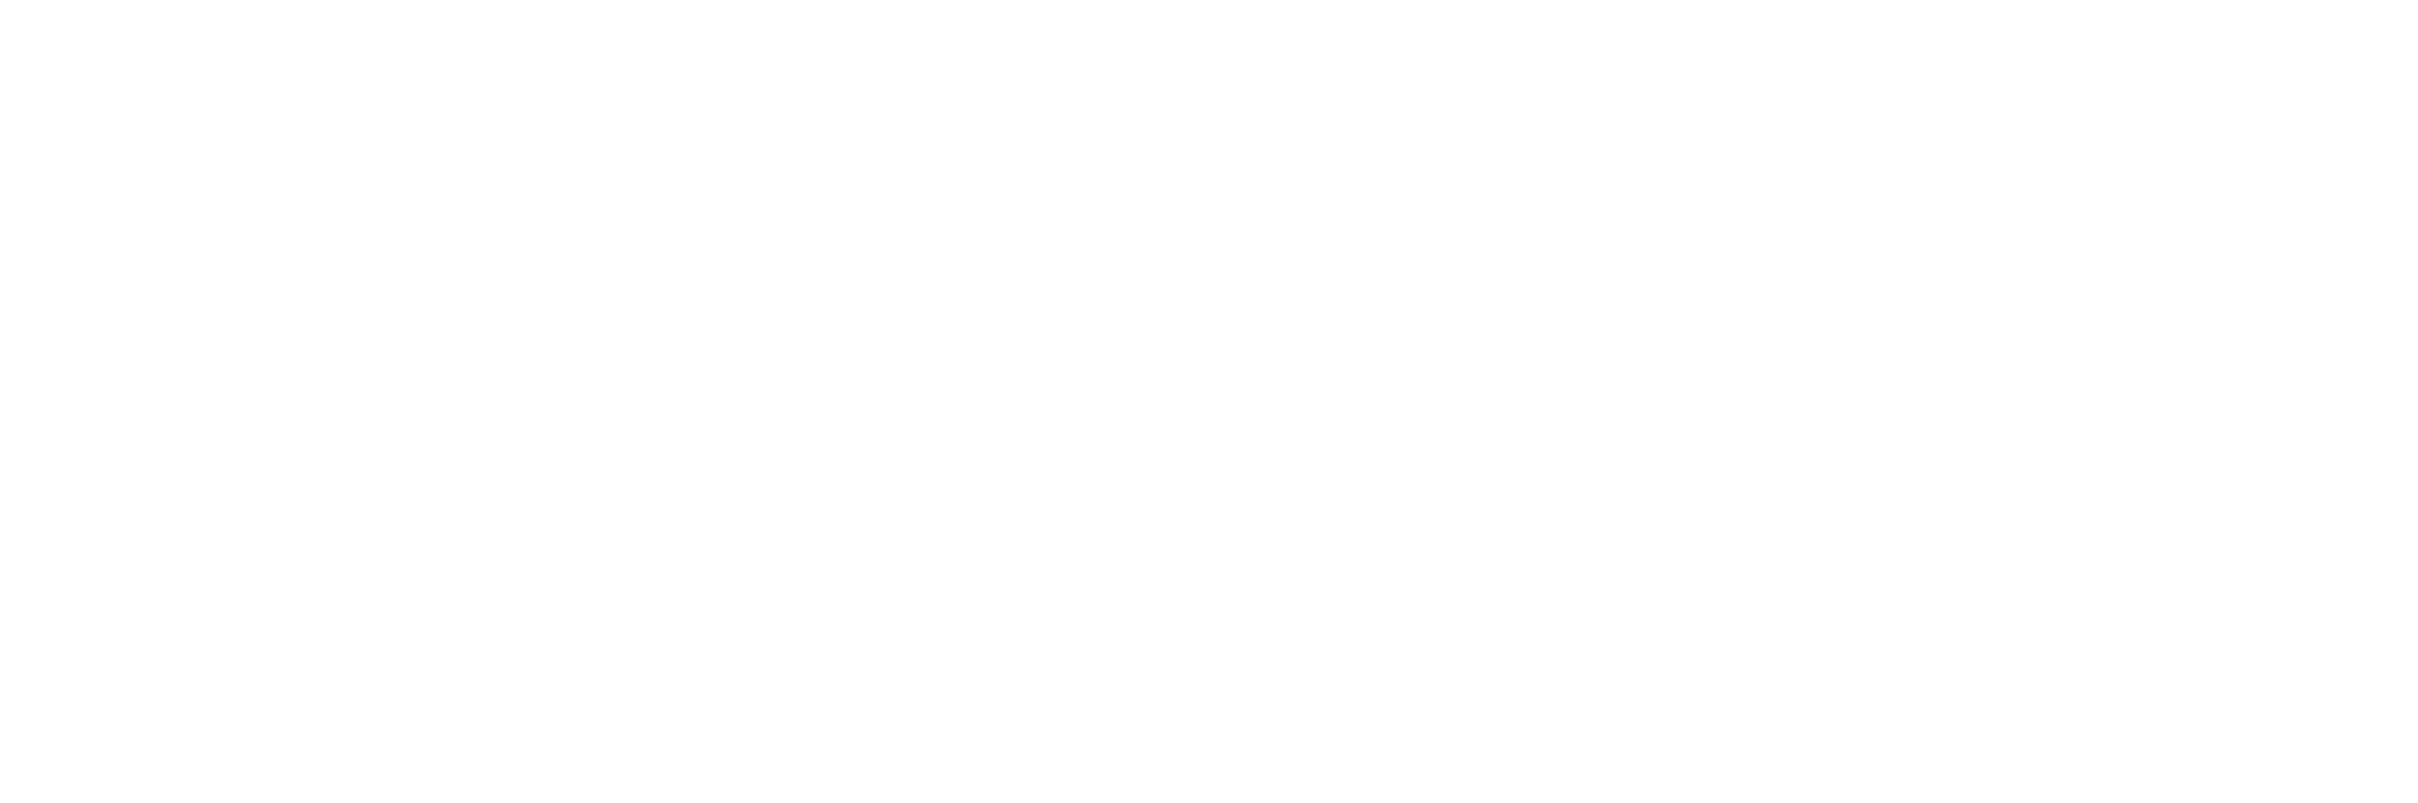 Crossway Logo - Home. Crossway Community Church, PA